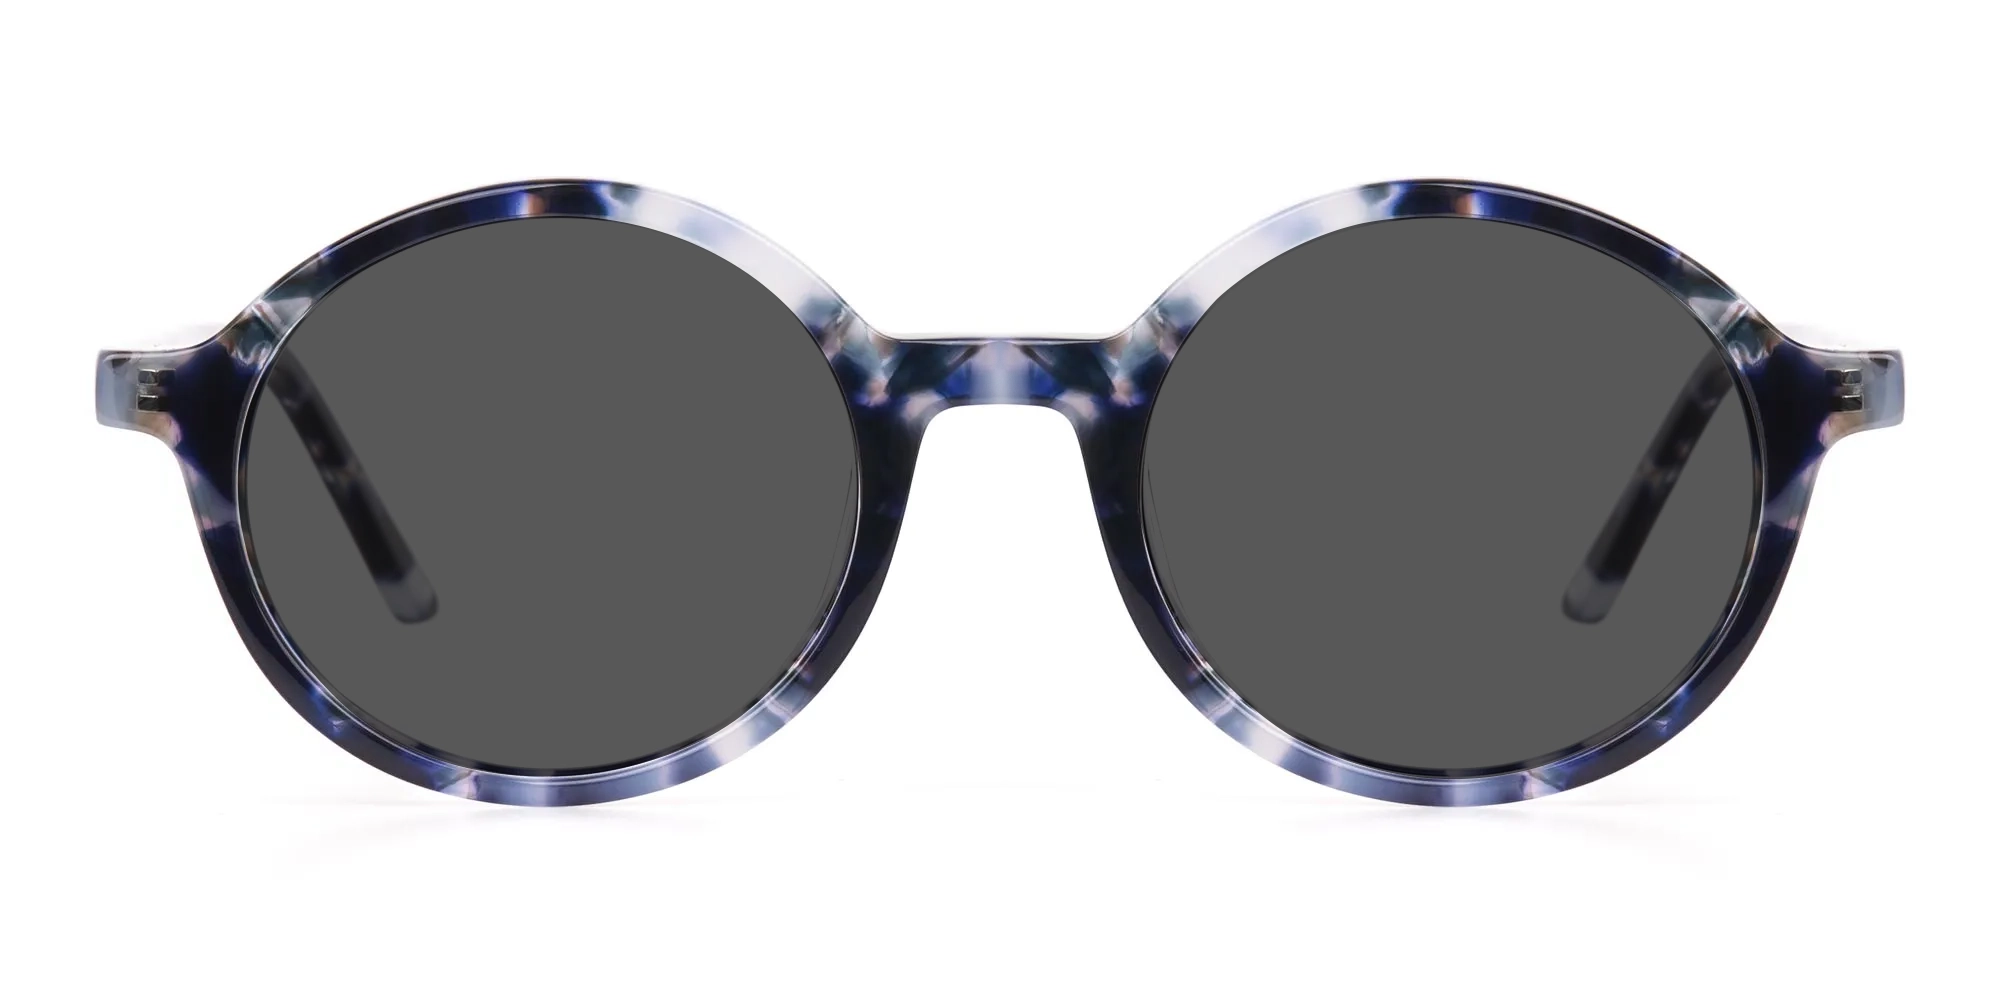 Oval Tortoise Shell Sunglasses